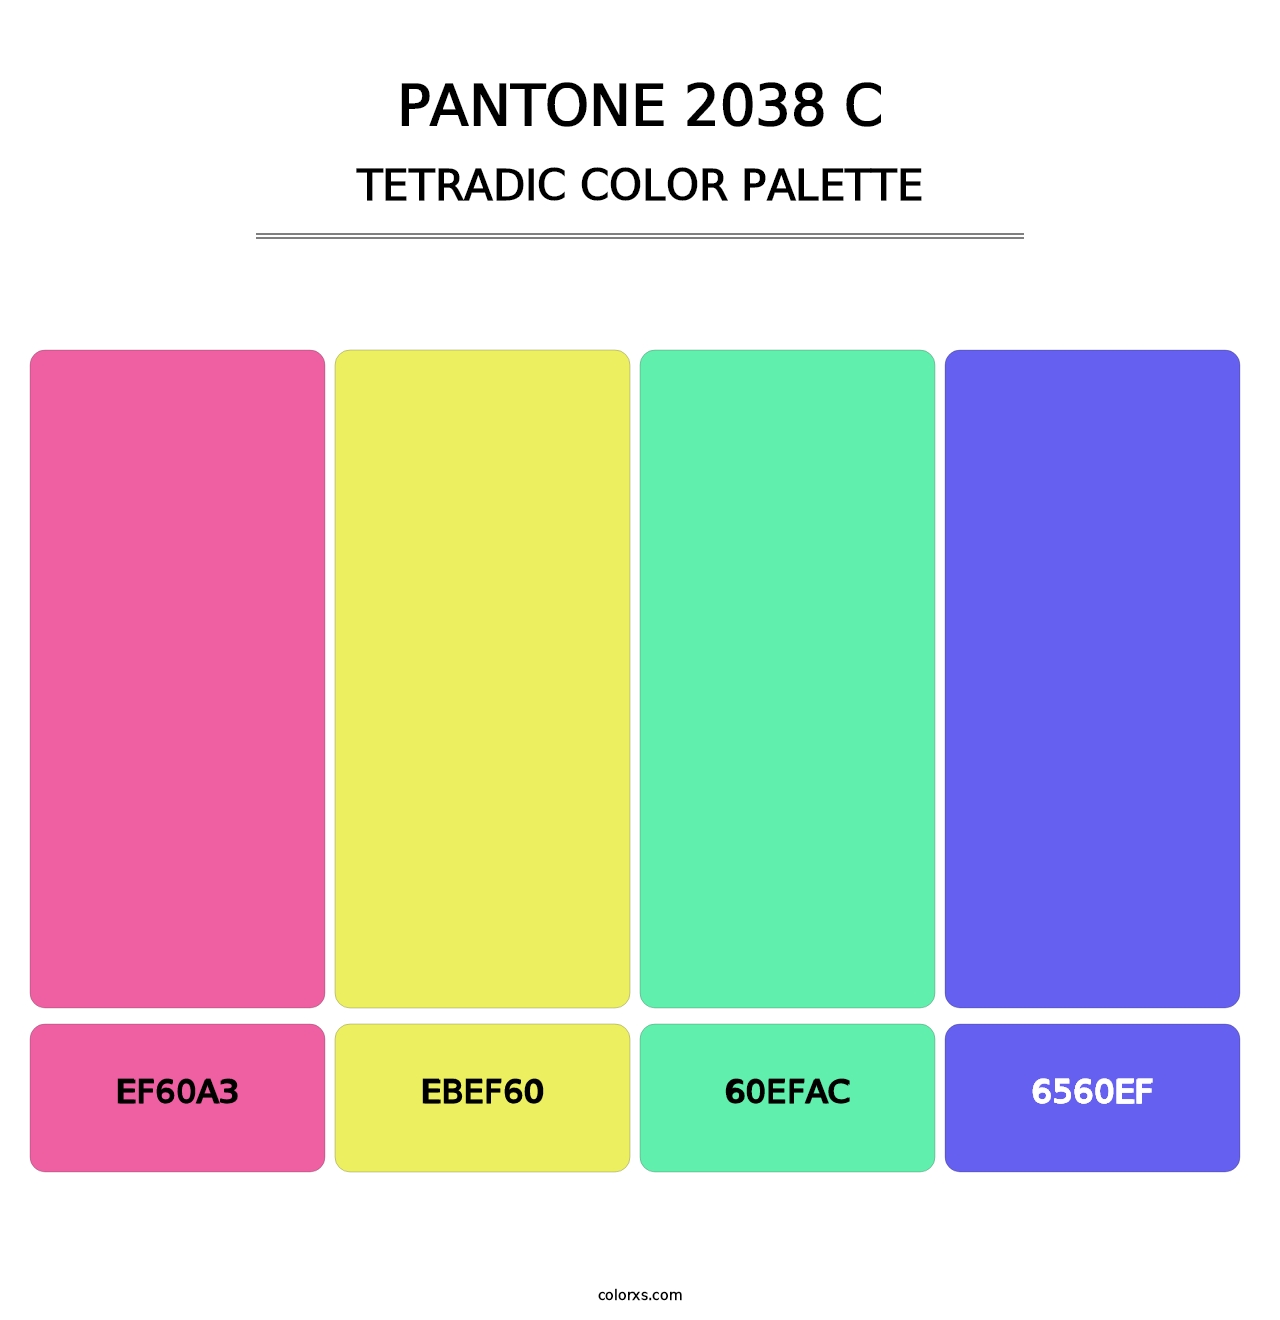 PANTONE 2038 C - Tetradic Color Palette